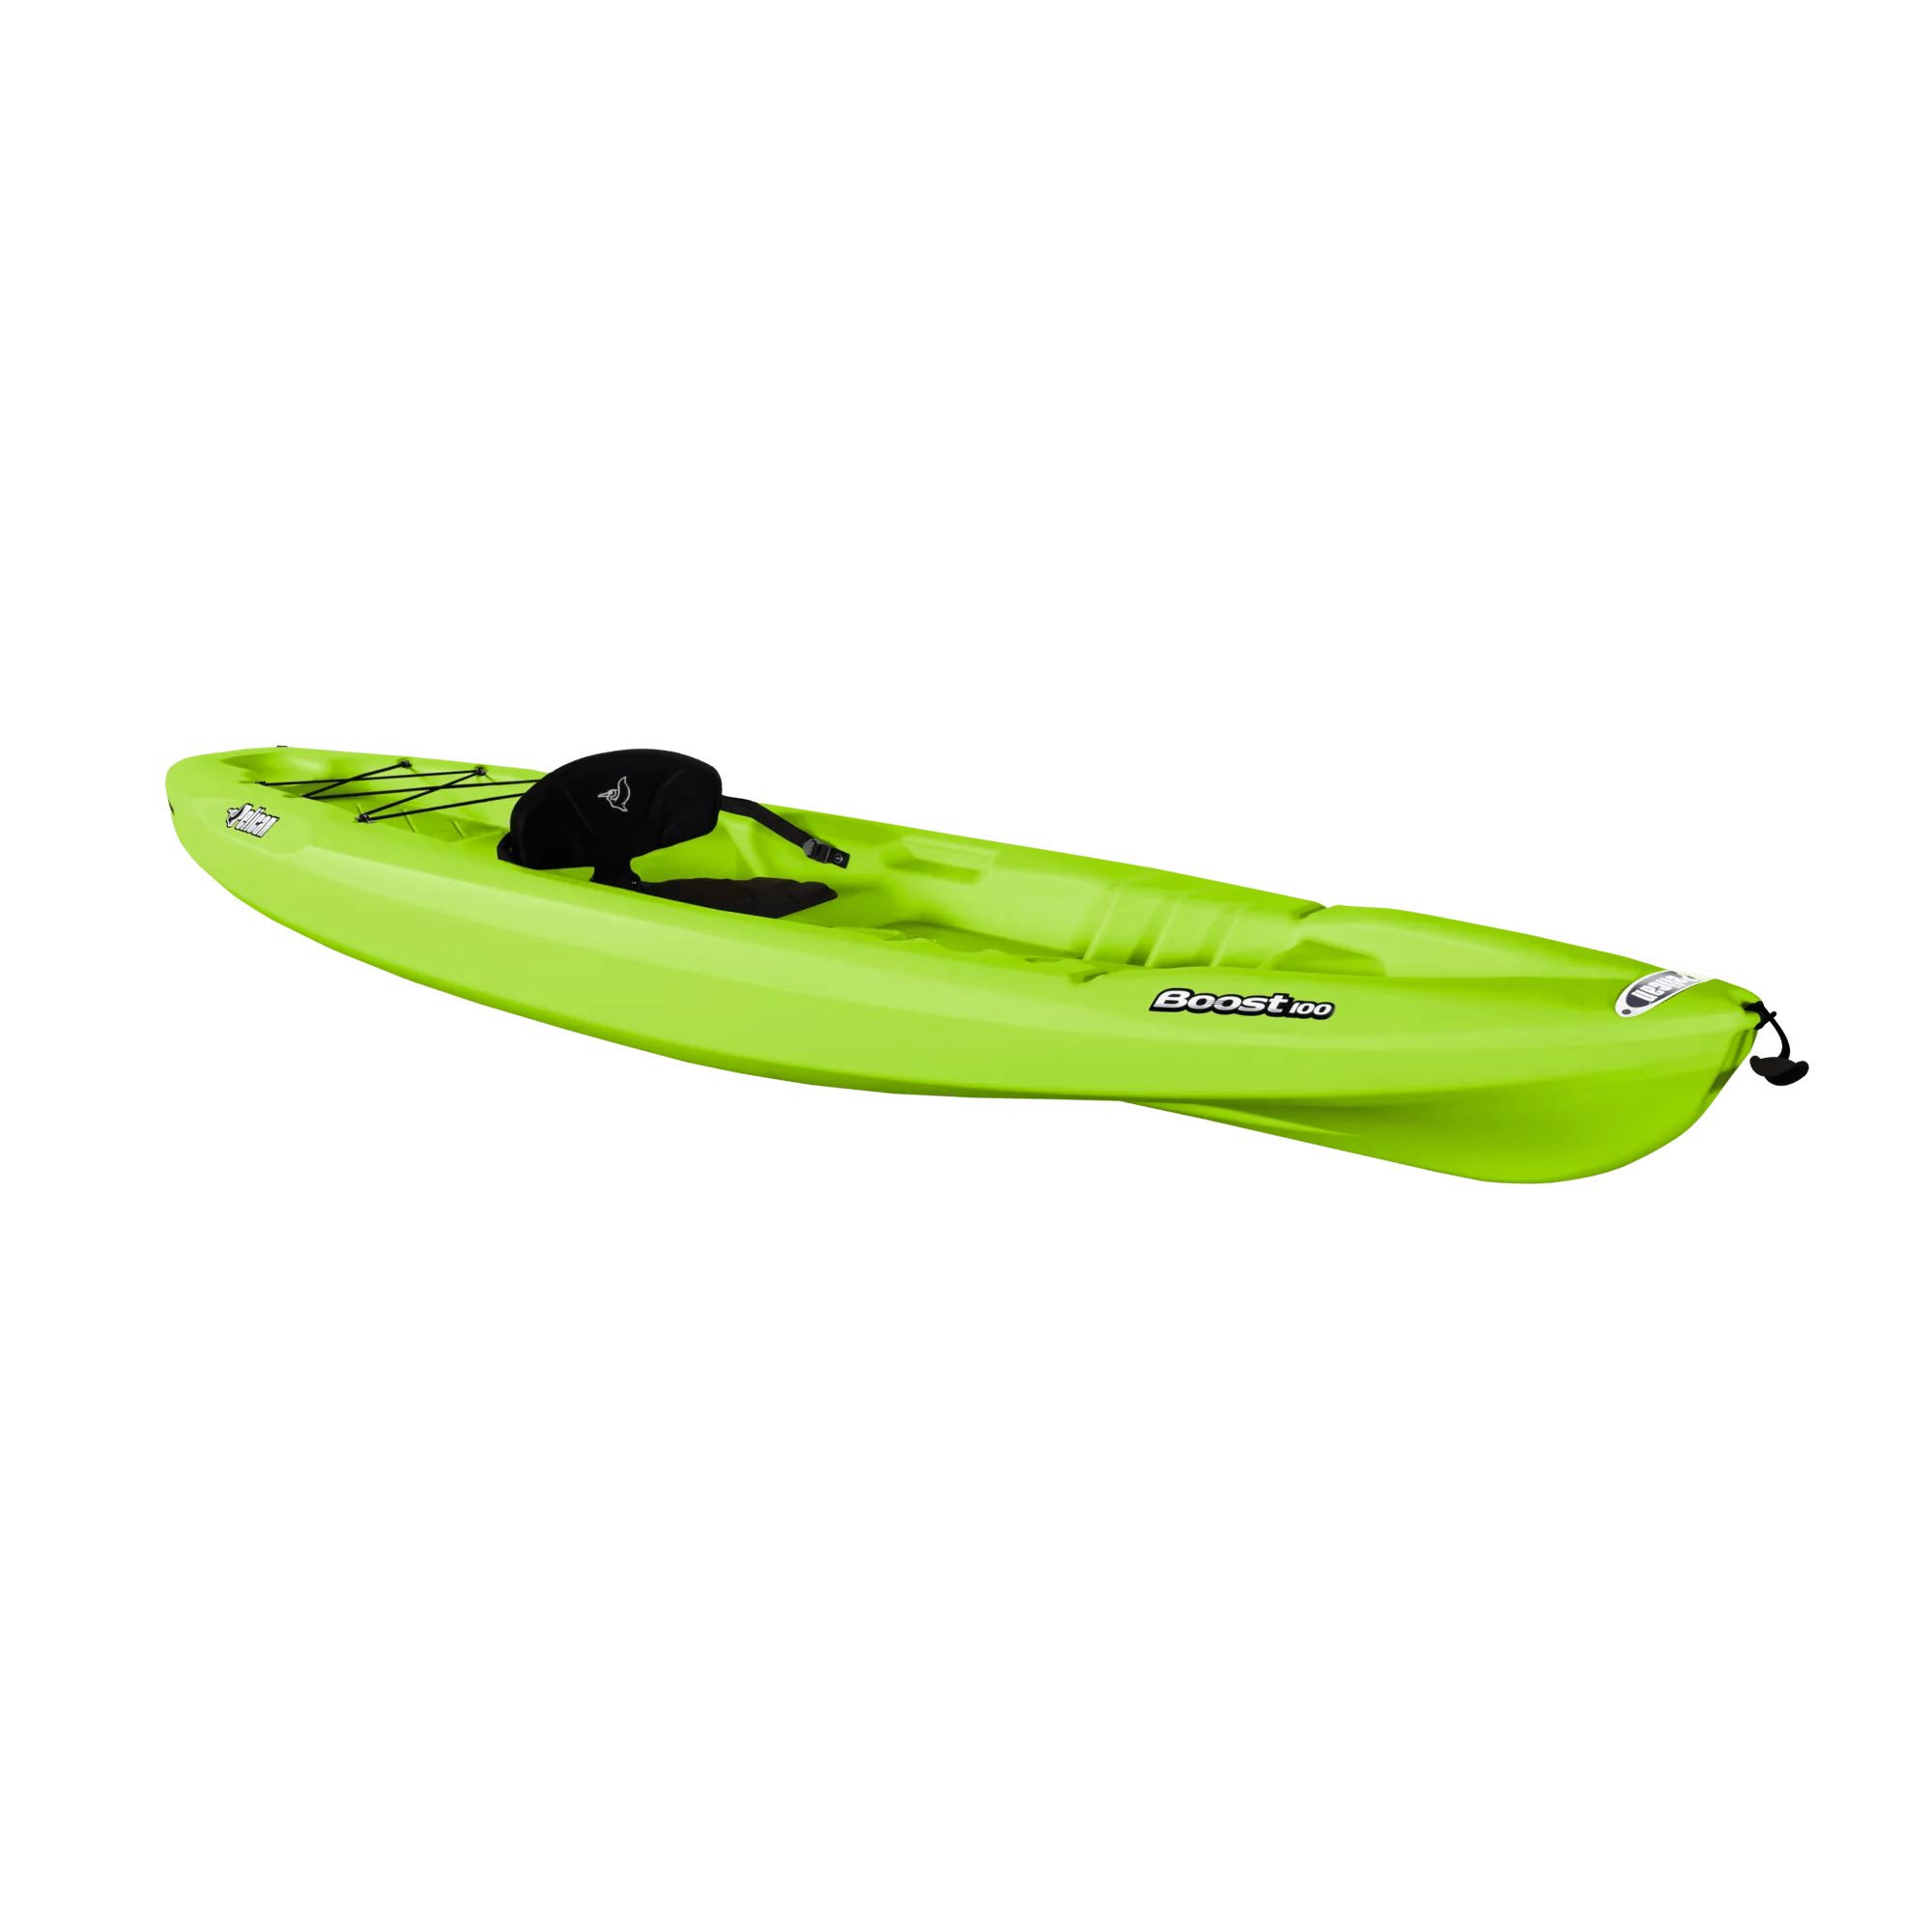 PELICAN - Boost 100 Recreational Kayak - Green - KOS10P202-00 - 